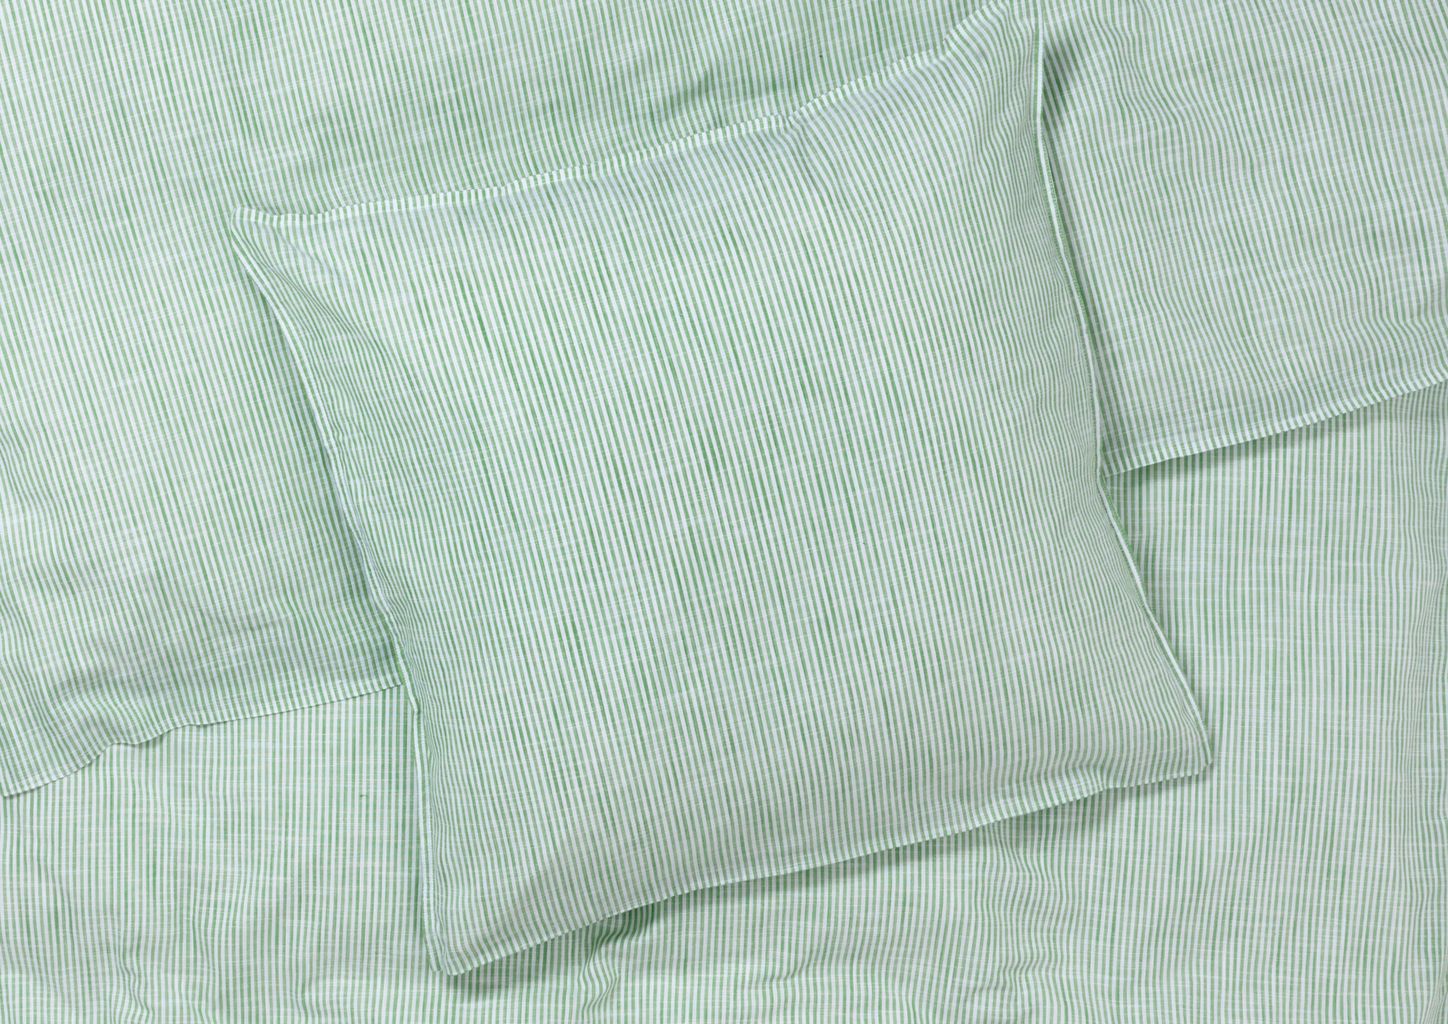 Juna monokrome linjer seng lin 140 x220 cm, grønn/hvit